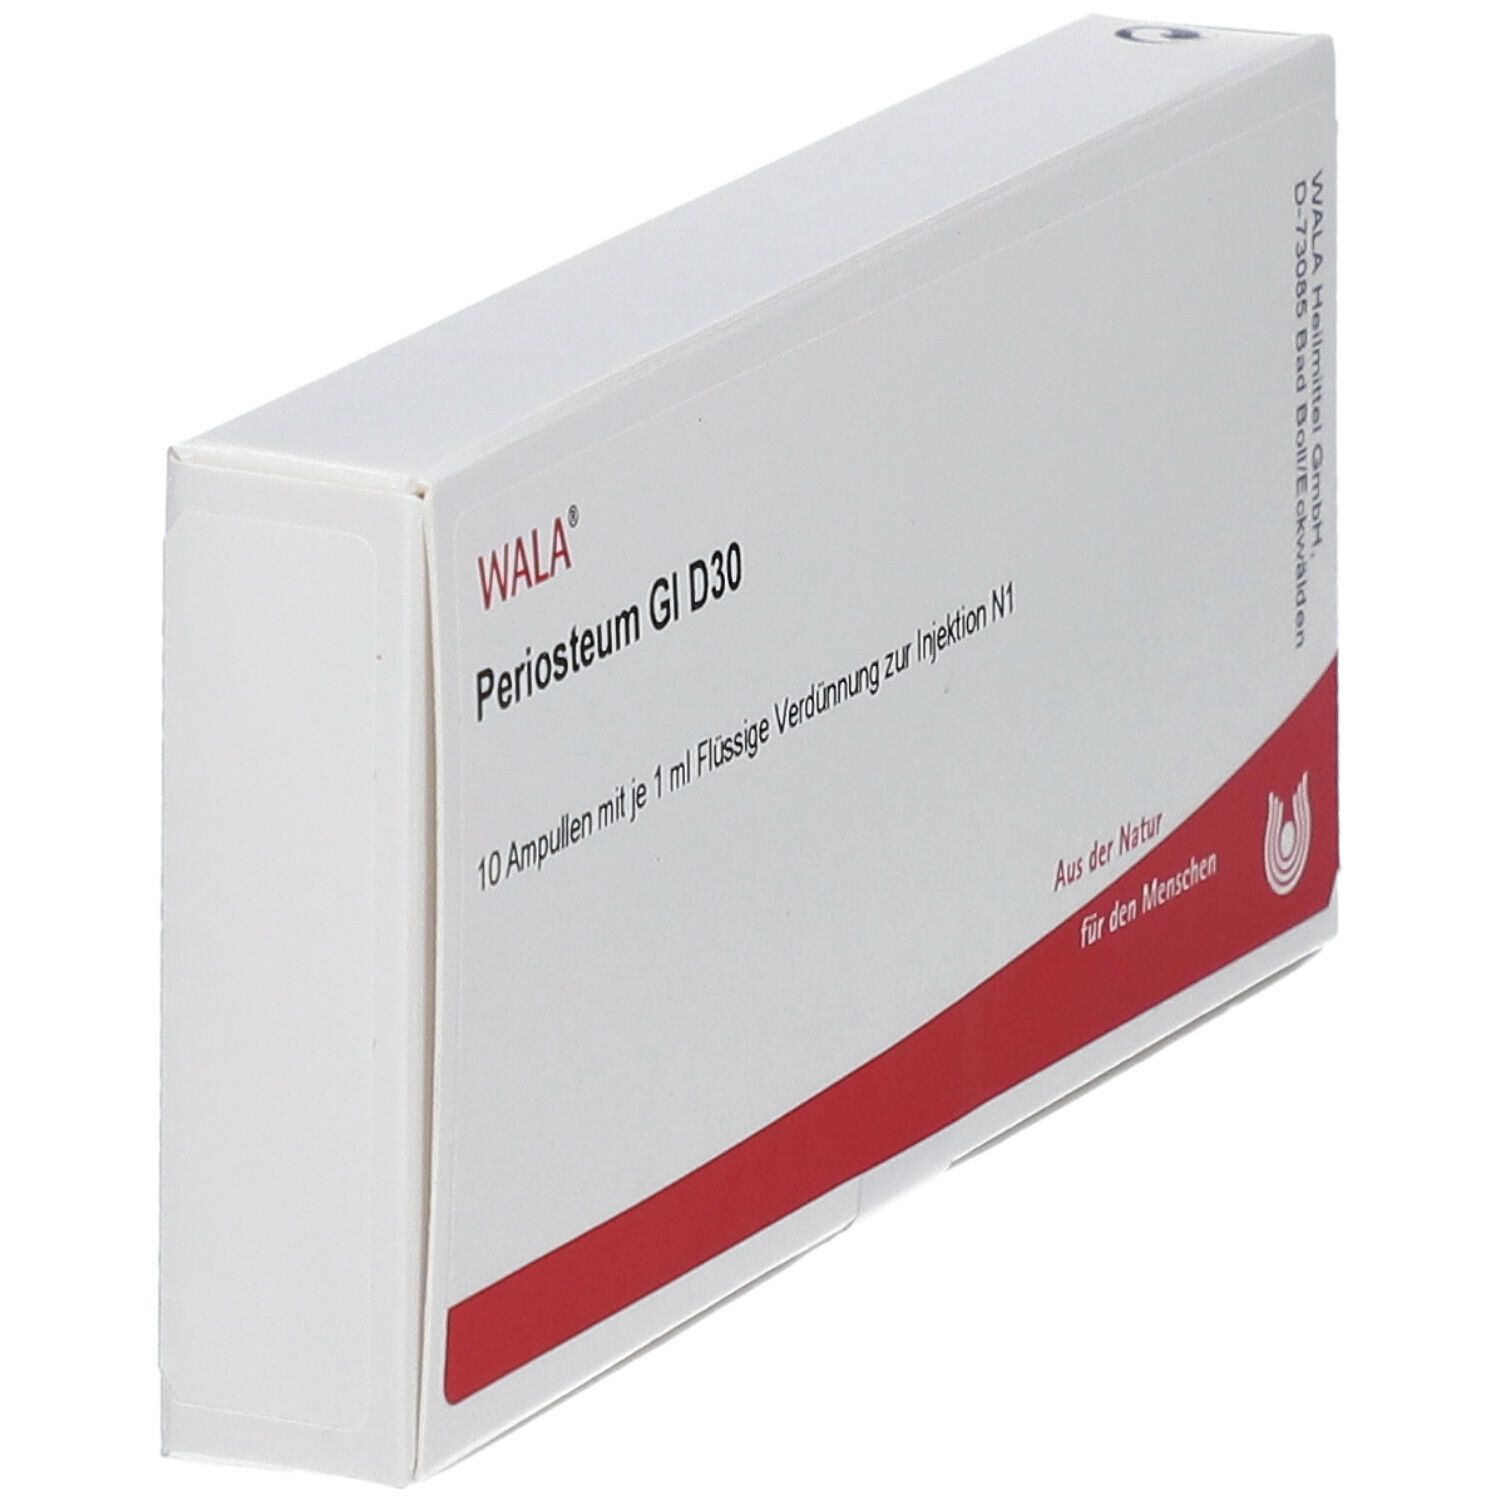 WALA® Periosteum Gl D 30